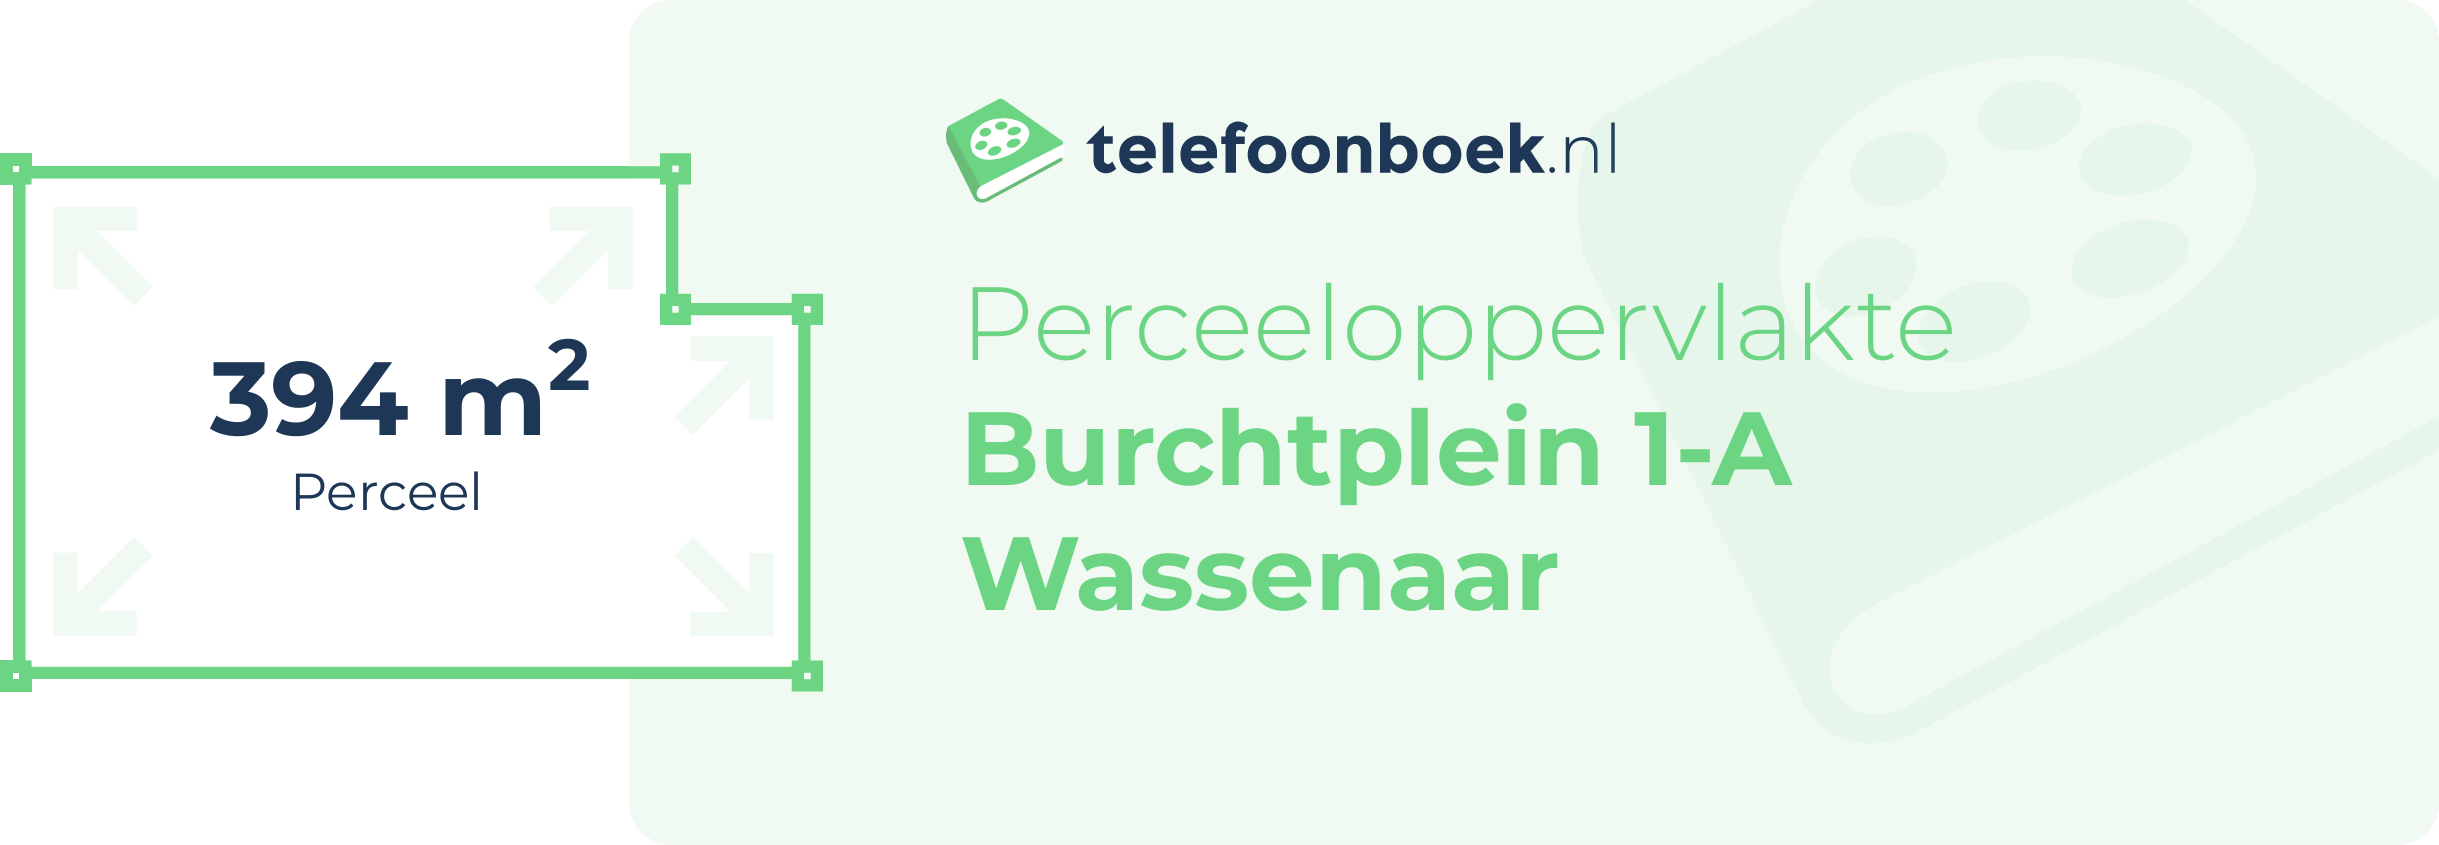 Perceeloppervlakte Burchtplein 1-A Wassenaar